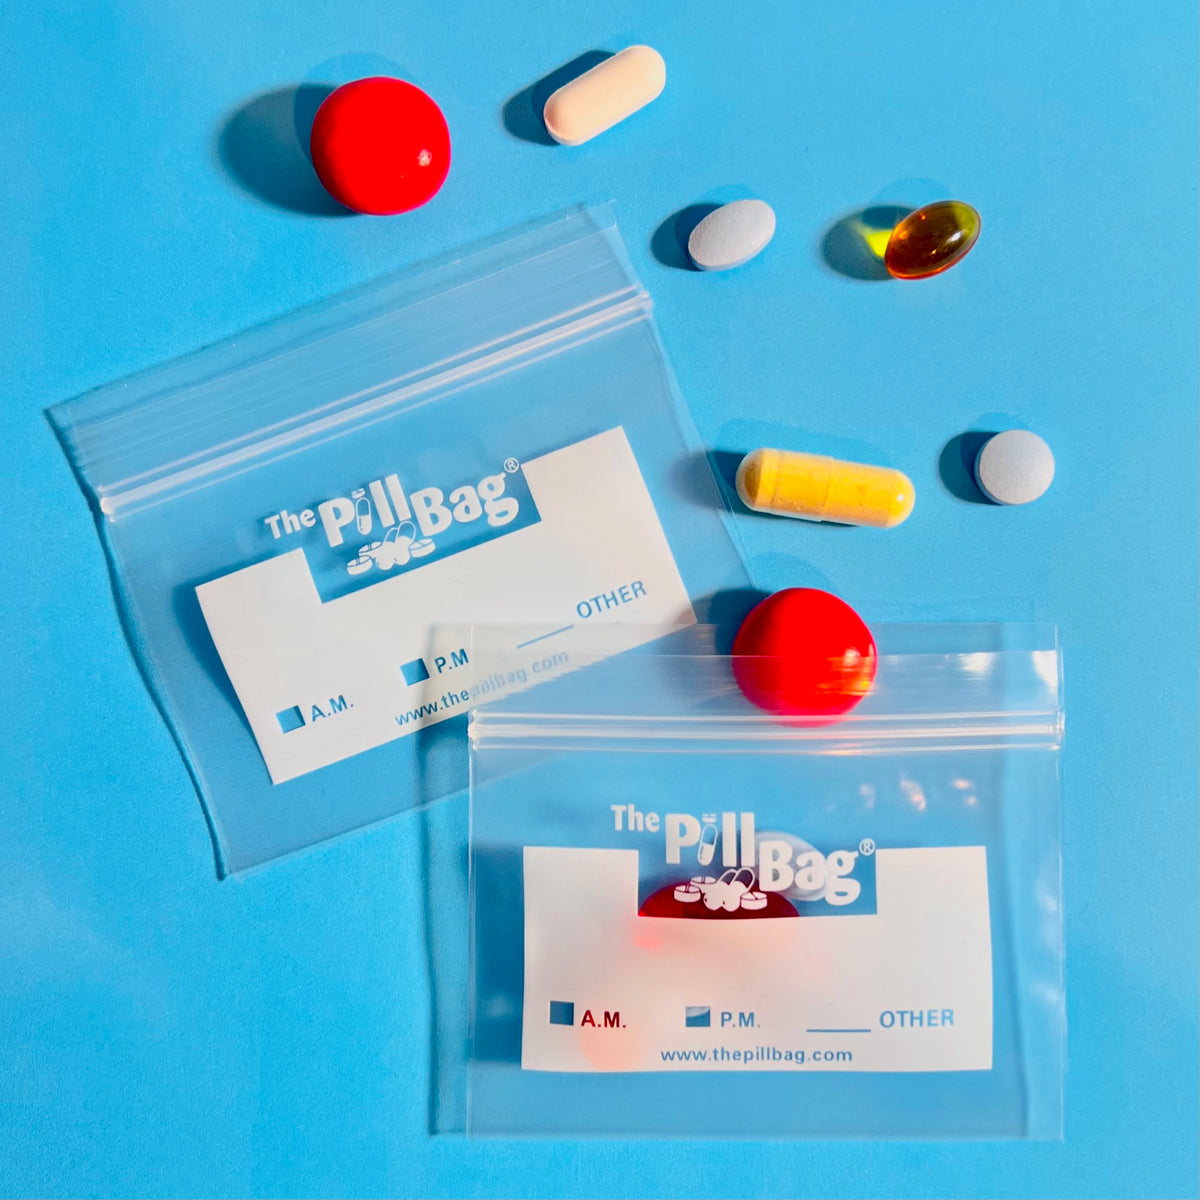 Curravax Pill Bags Pack of 500 - BPA Free 3 x 2.75 inch Pill